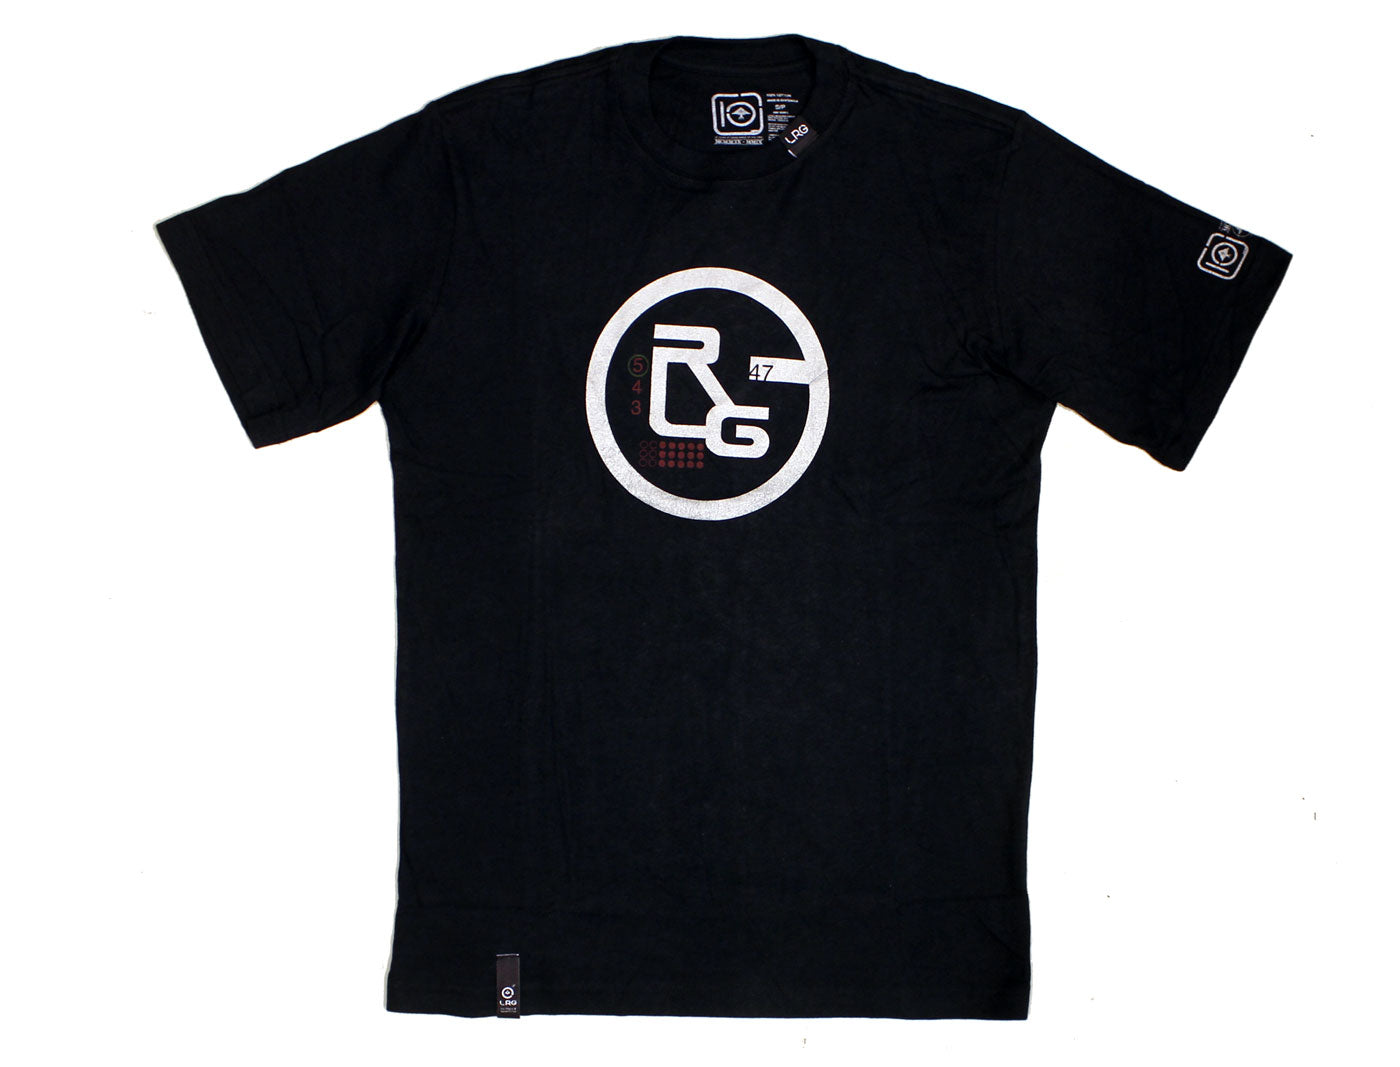 Lrg Cycle of Life T-shirt Black